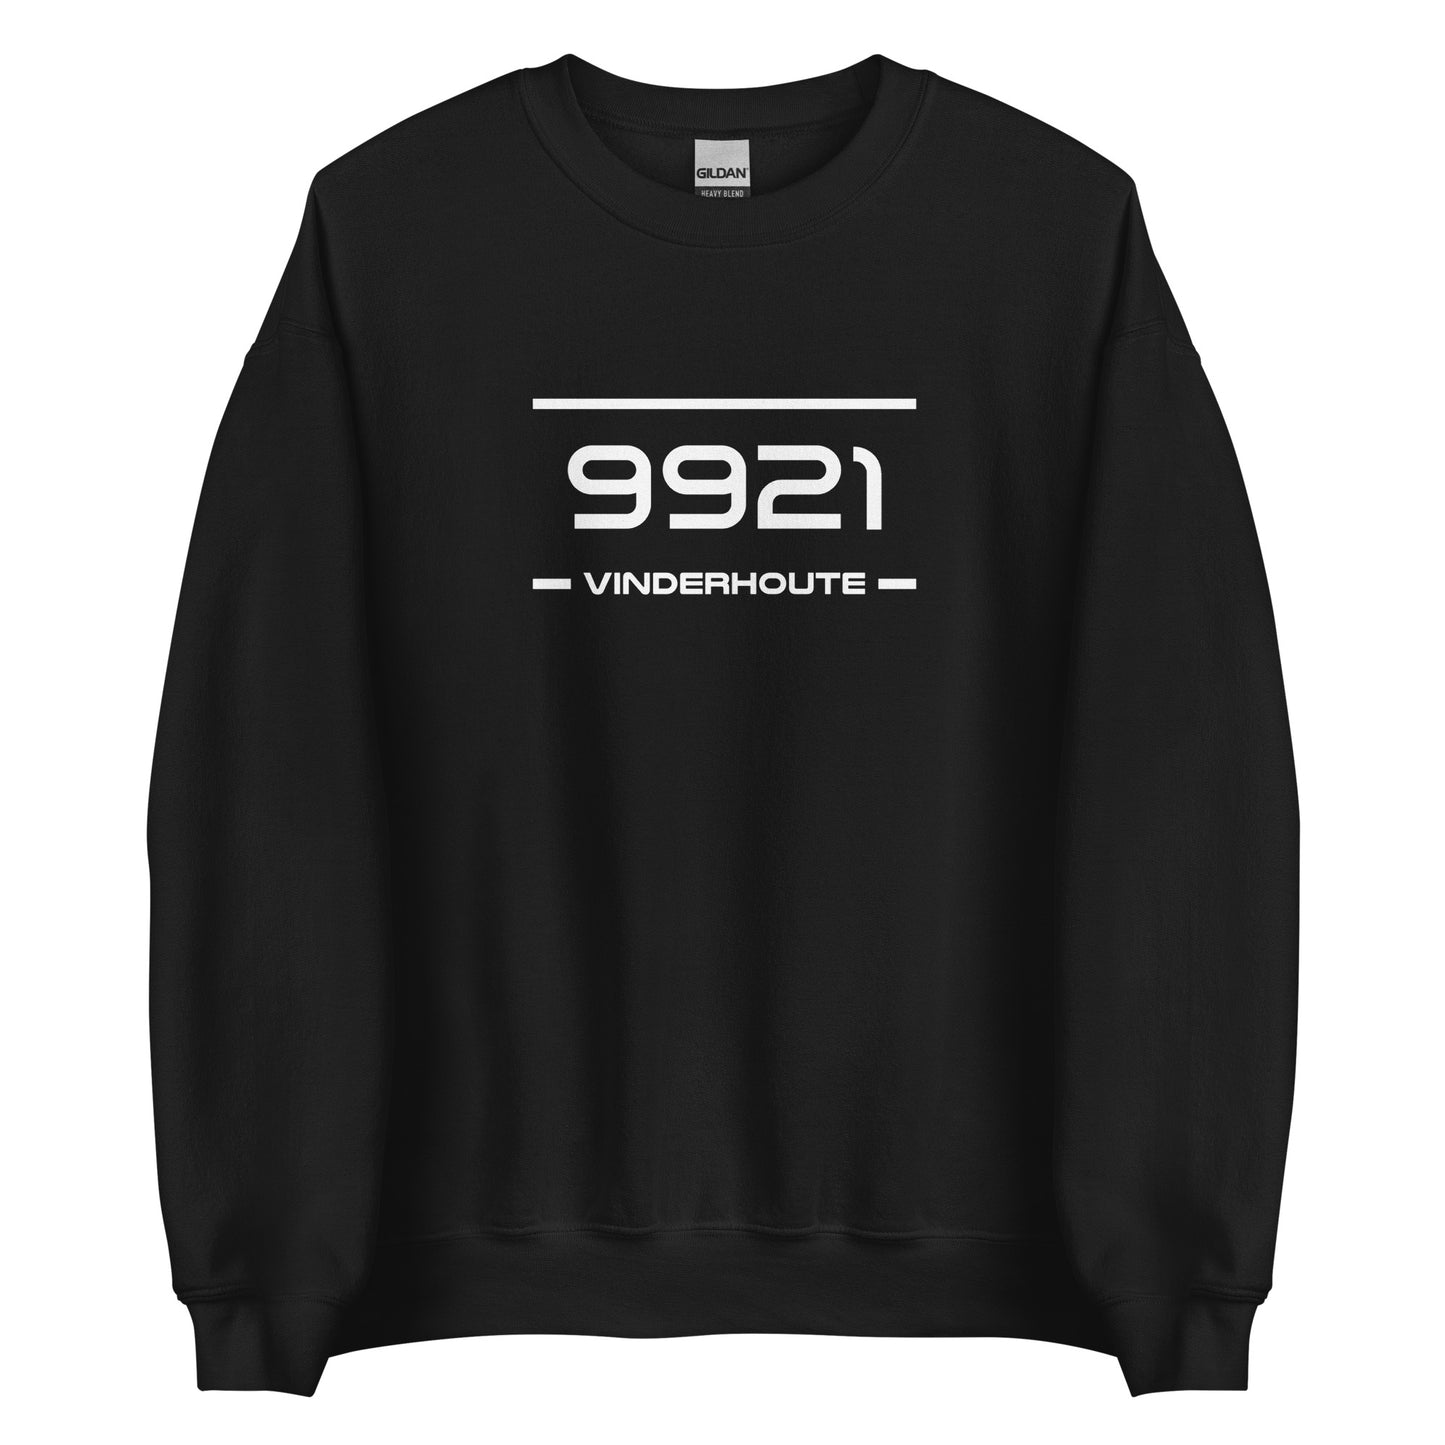 Sweater - 9921 - Vinderhoute (M/V)